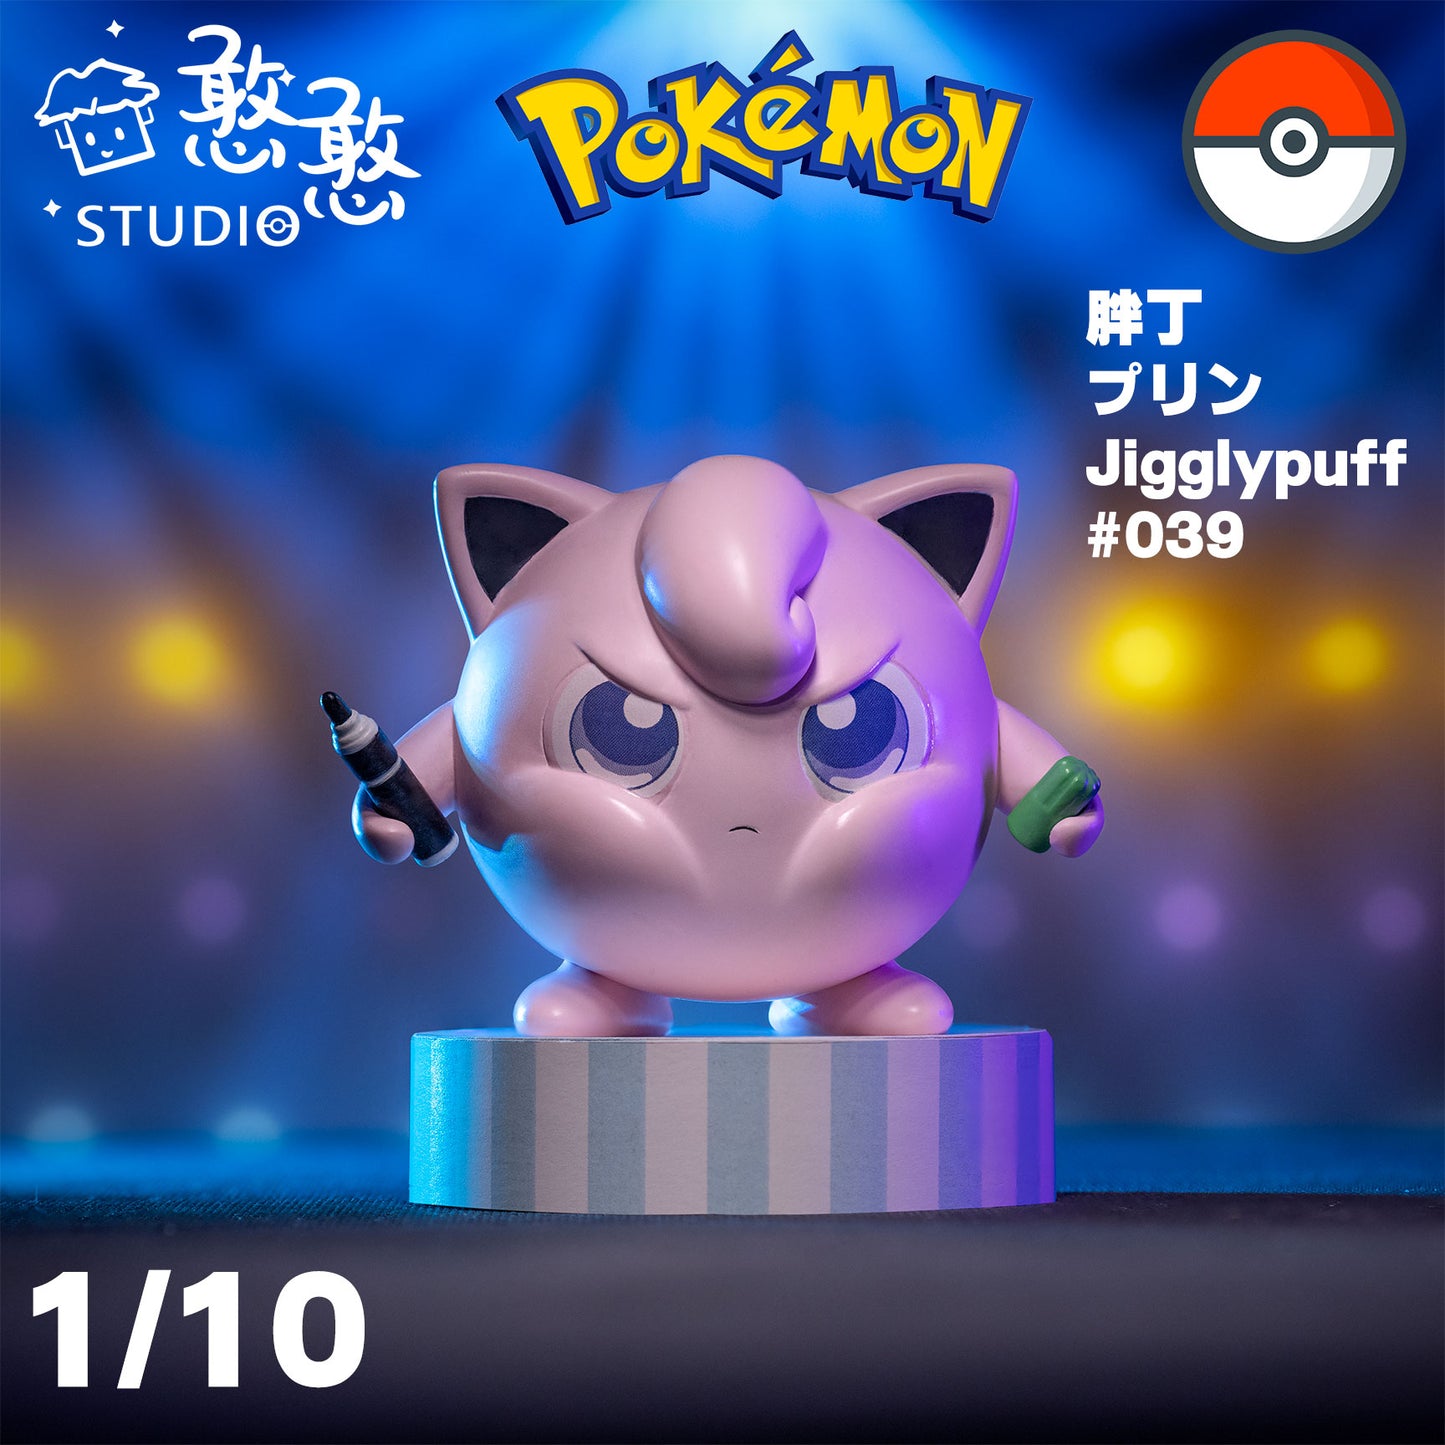 〖Sold Out〗Pokemon Scale World Jigglypuff #039 1:10 - HH Studio